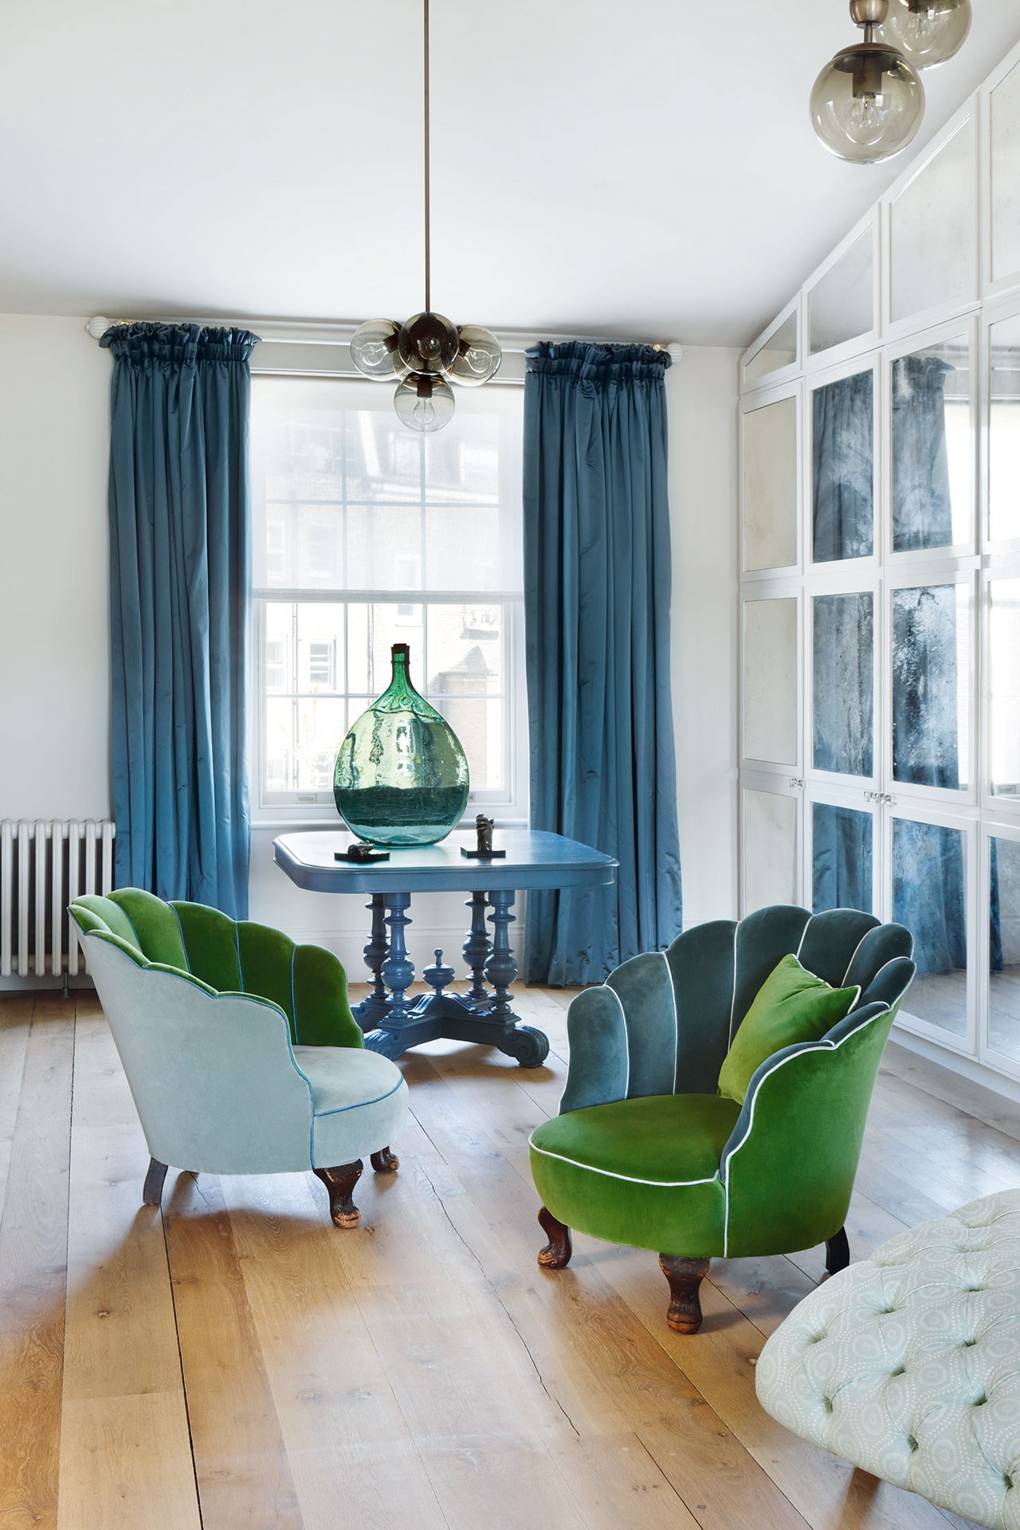 Upholstery Fabric Ideas Interior Design Inspiration